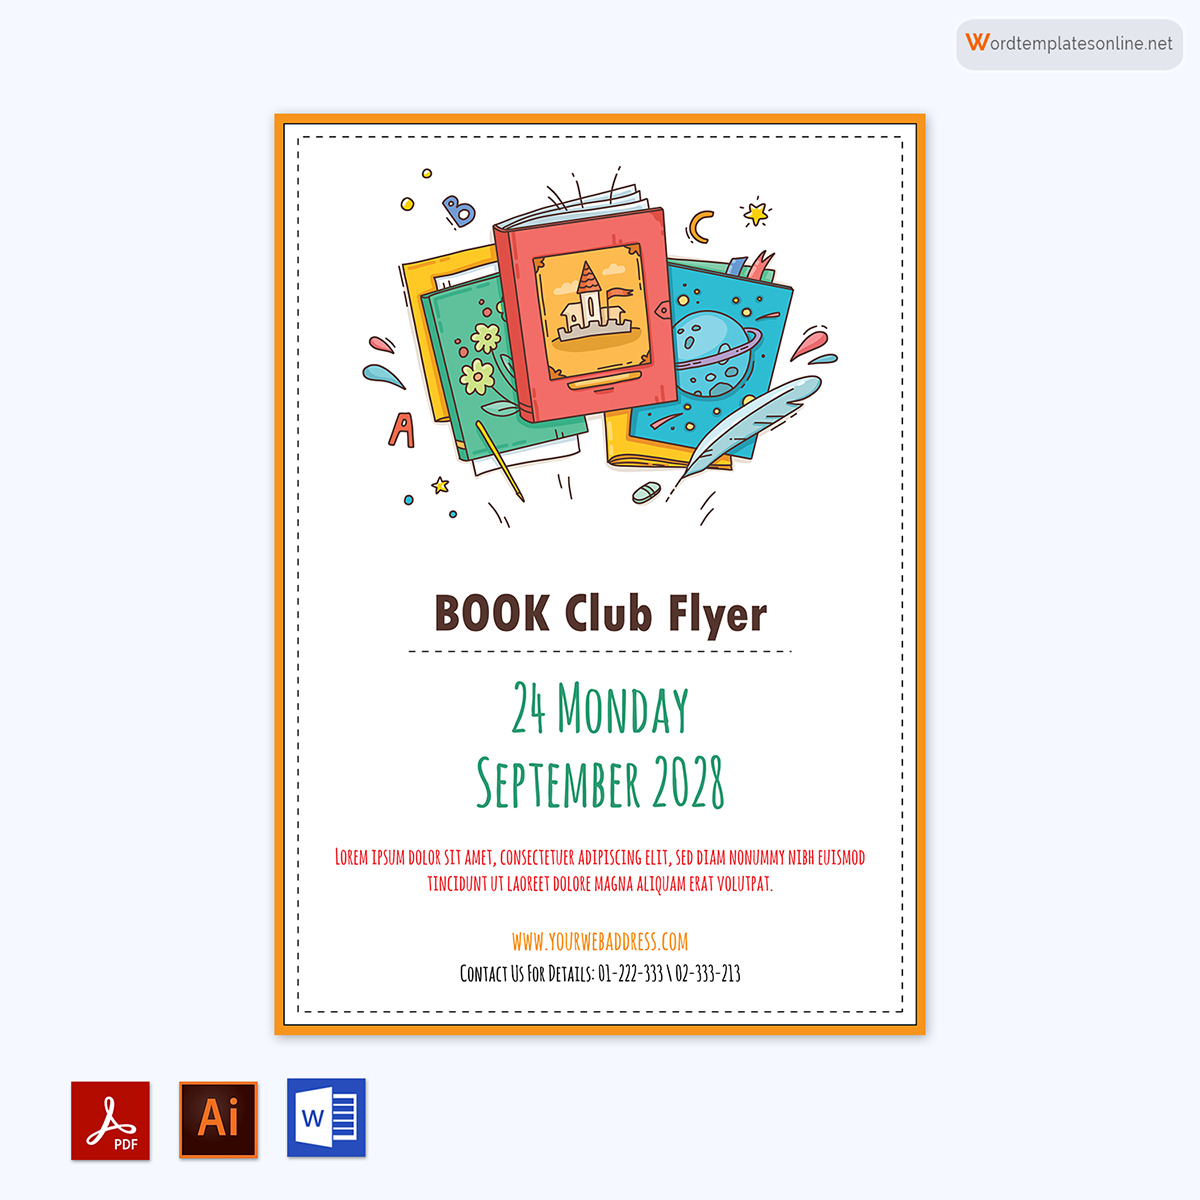 Book Club Flyer Templates - Free Word, PSD, AI Mockup